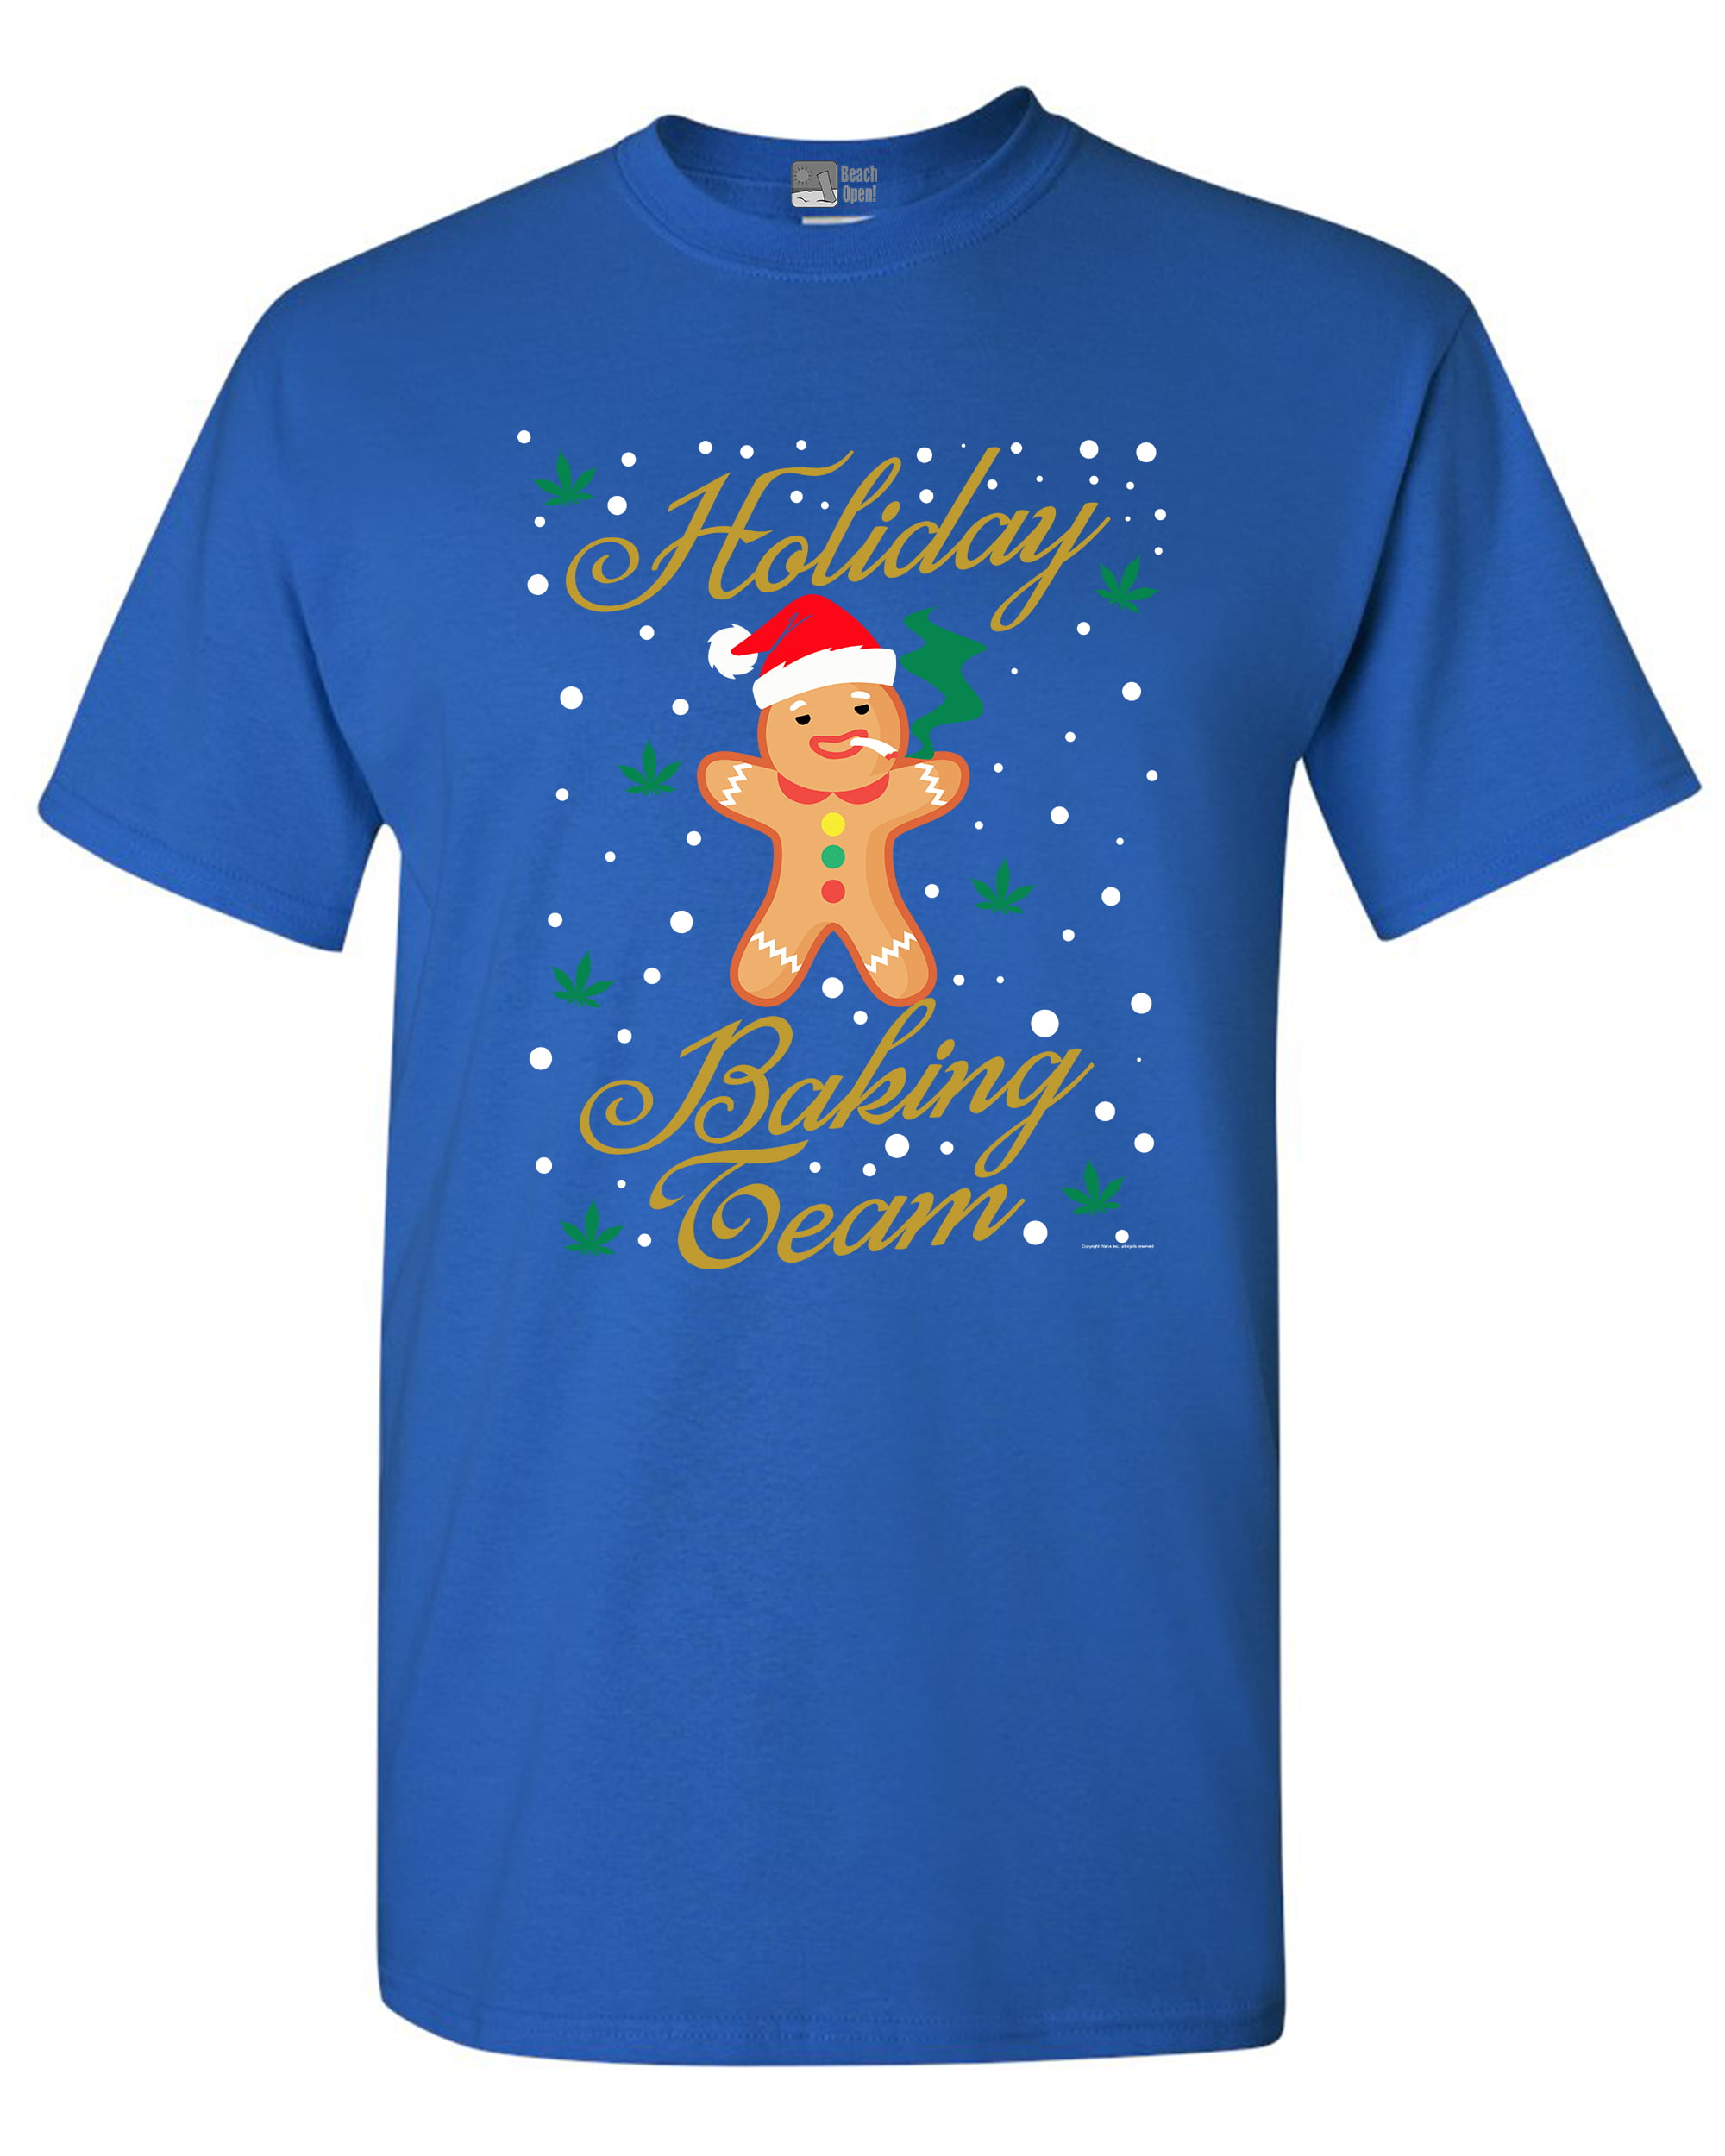 Gingerbread Man Christmas Shirt Christmas Cookie Tee Oh Snap Funny Christmas Shirt Holiday Party Shirt Baking Humor Shirt